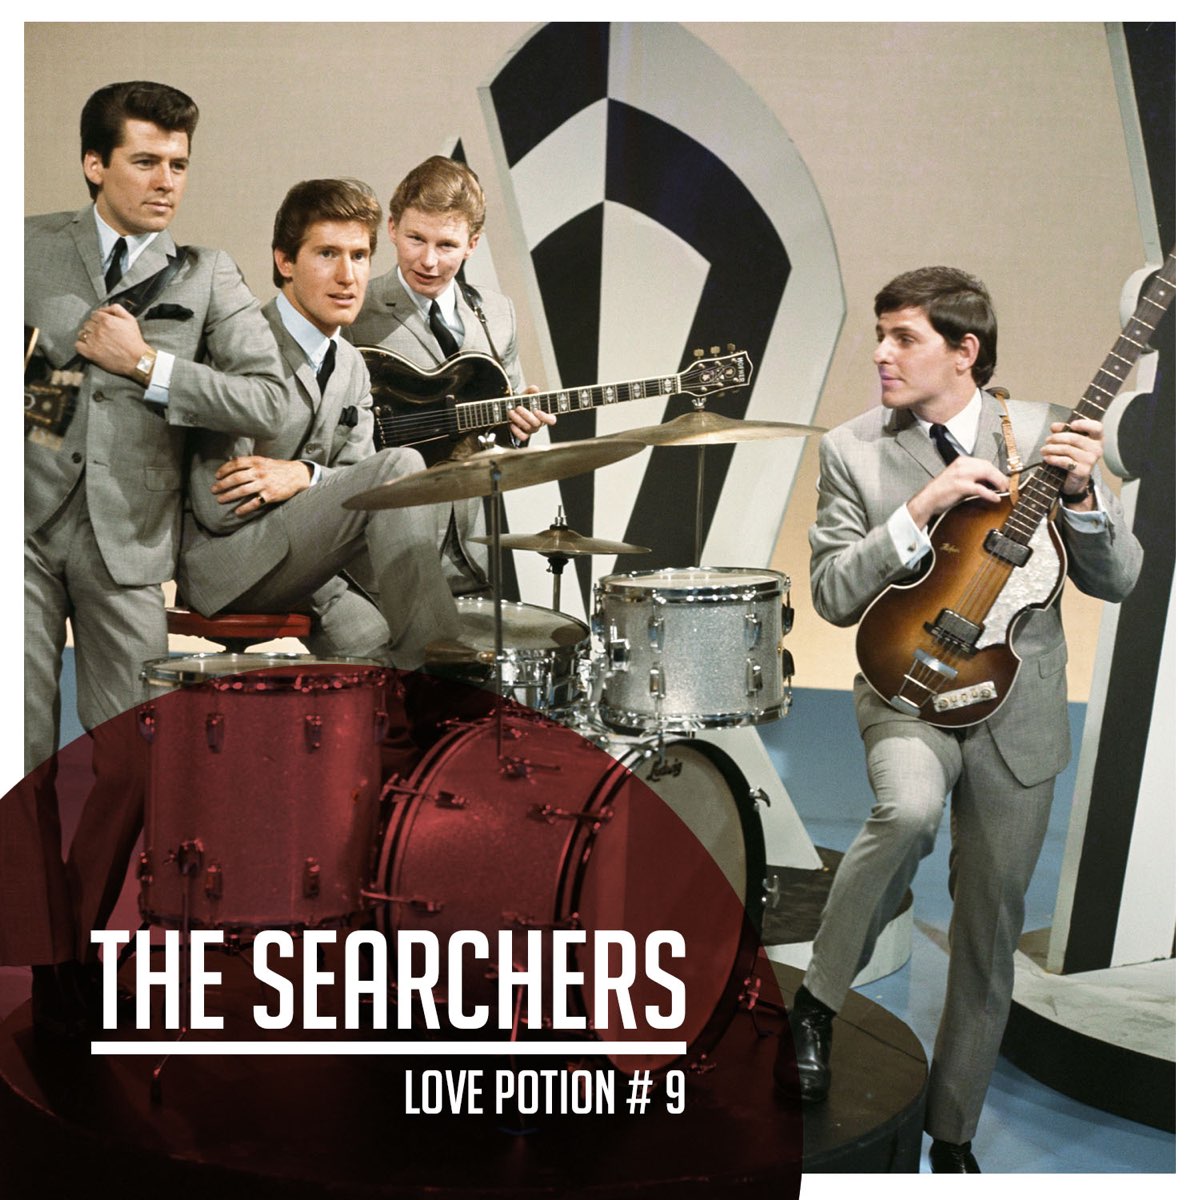 Популярные песни 9. Группа the Searchers. The Searchers Love Potion no. 9. The Searchers 1973. Фото группы the Searchers.